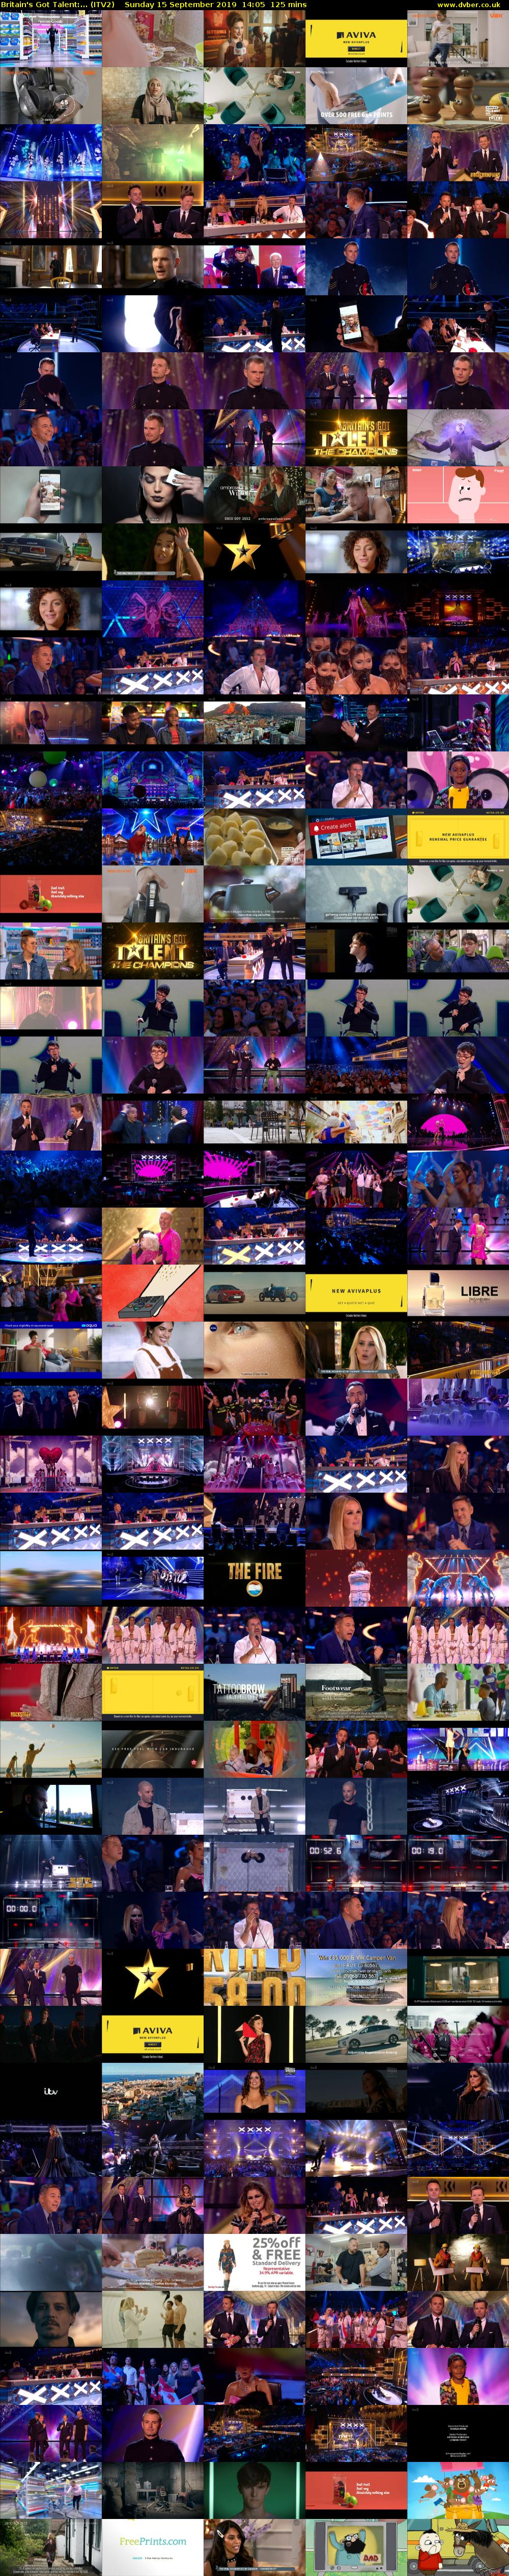 Britain's Got Talent:... (ITV2) Sunday 15 September 2019 14:05 - 16:10